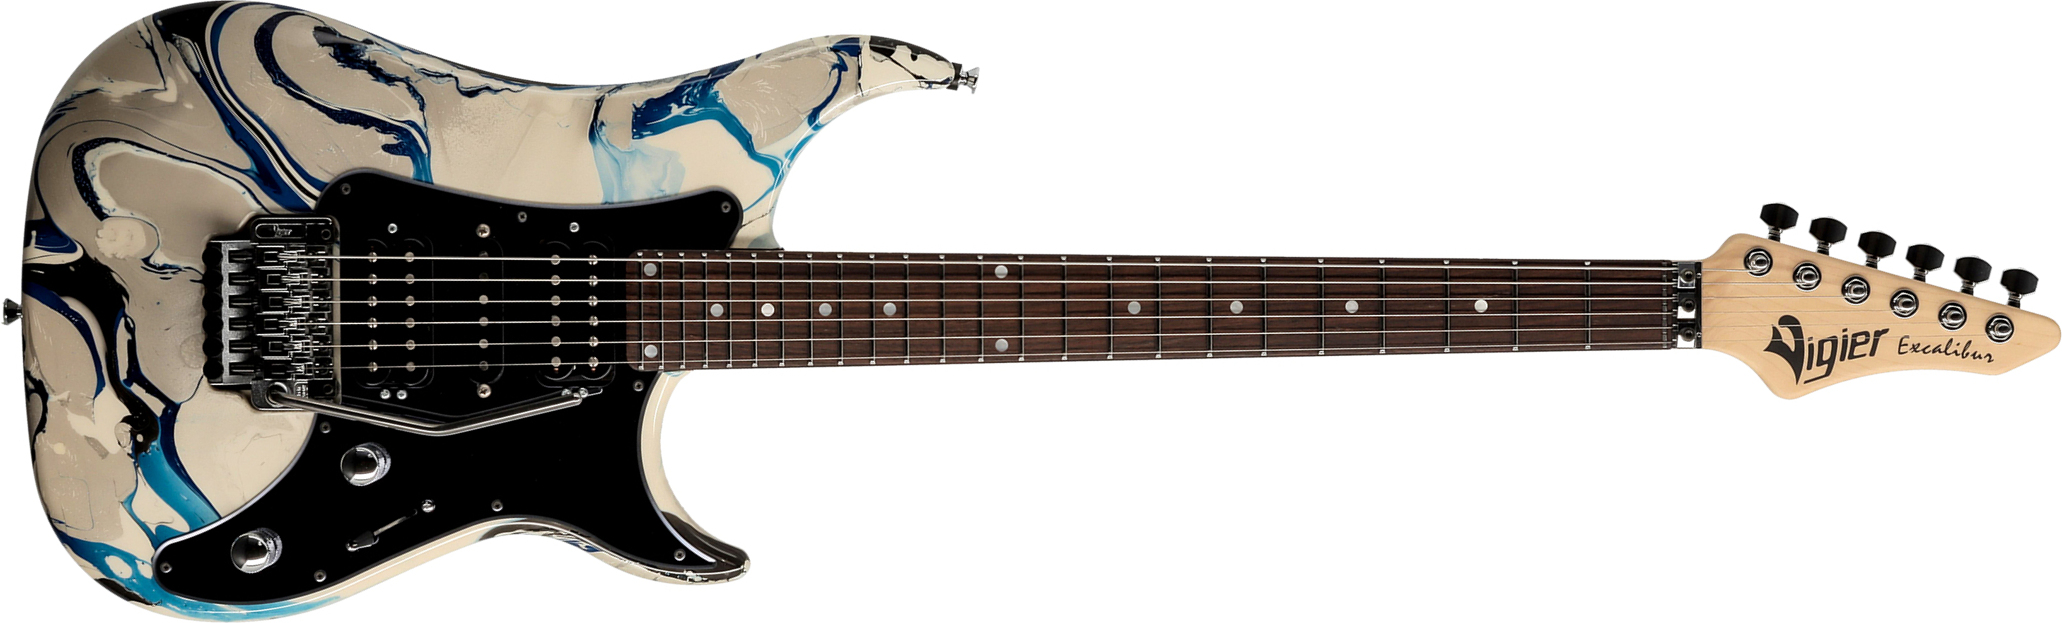 Vigier Excalibur Original Hsh Fr Rw - Rock Art Grey Blue - Guitarra eléctrica con forma de str. - Main picture